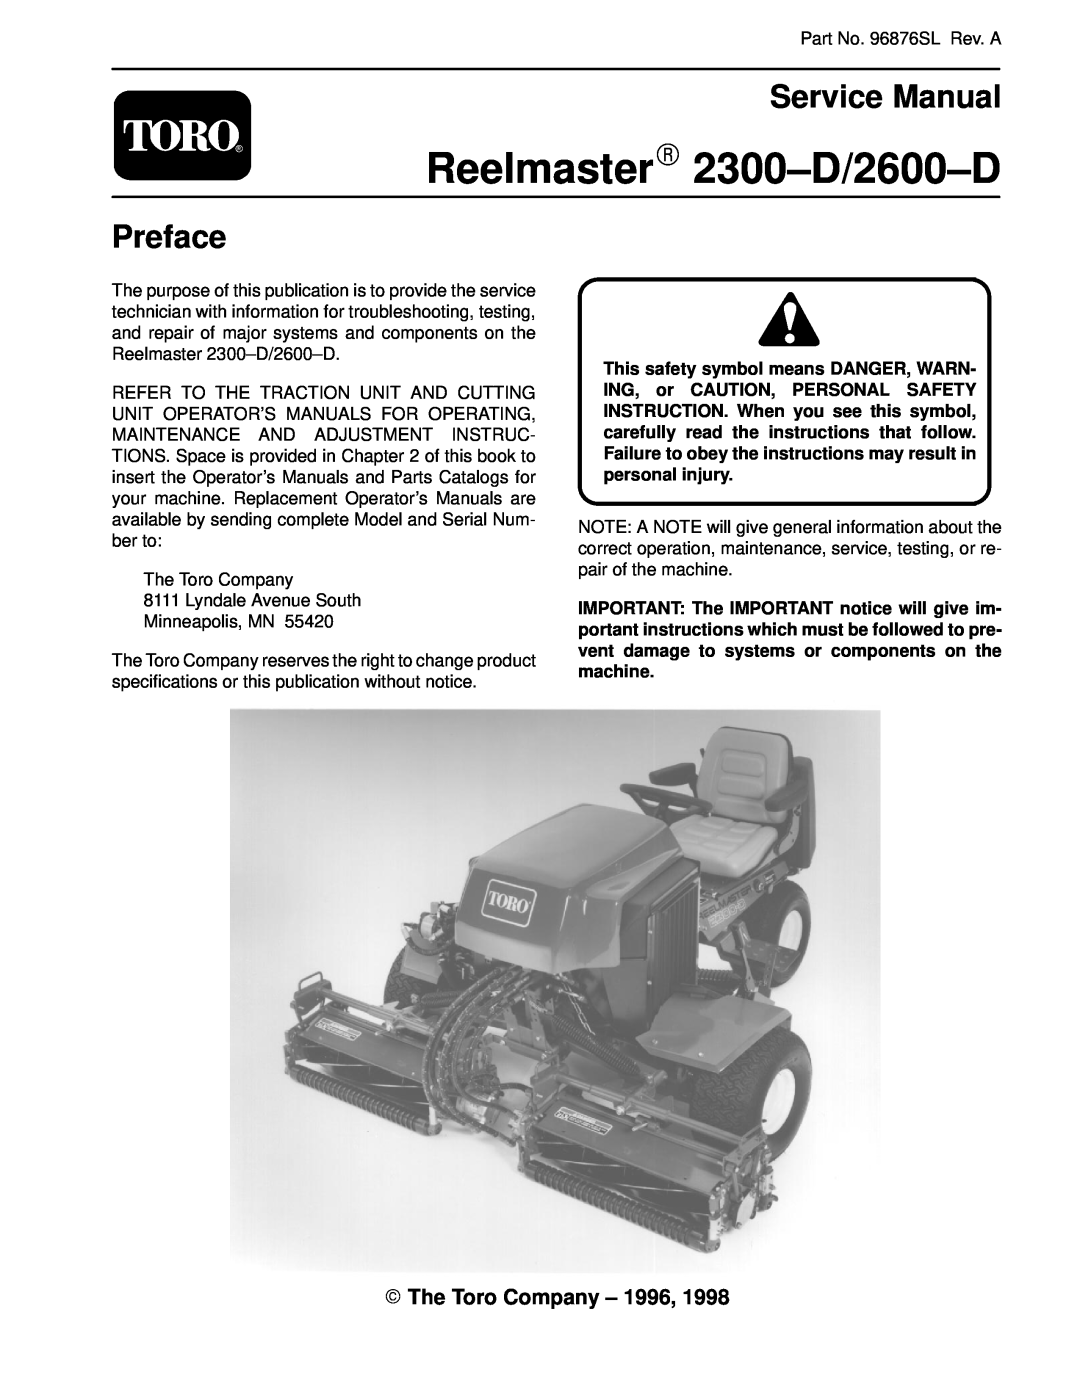 Toro 2600D, 2300-D service manual Reelmaster 2300±D/2600±D, Service Manual, Preface,  The Toro Company ± 1996 